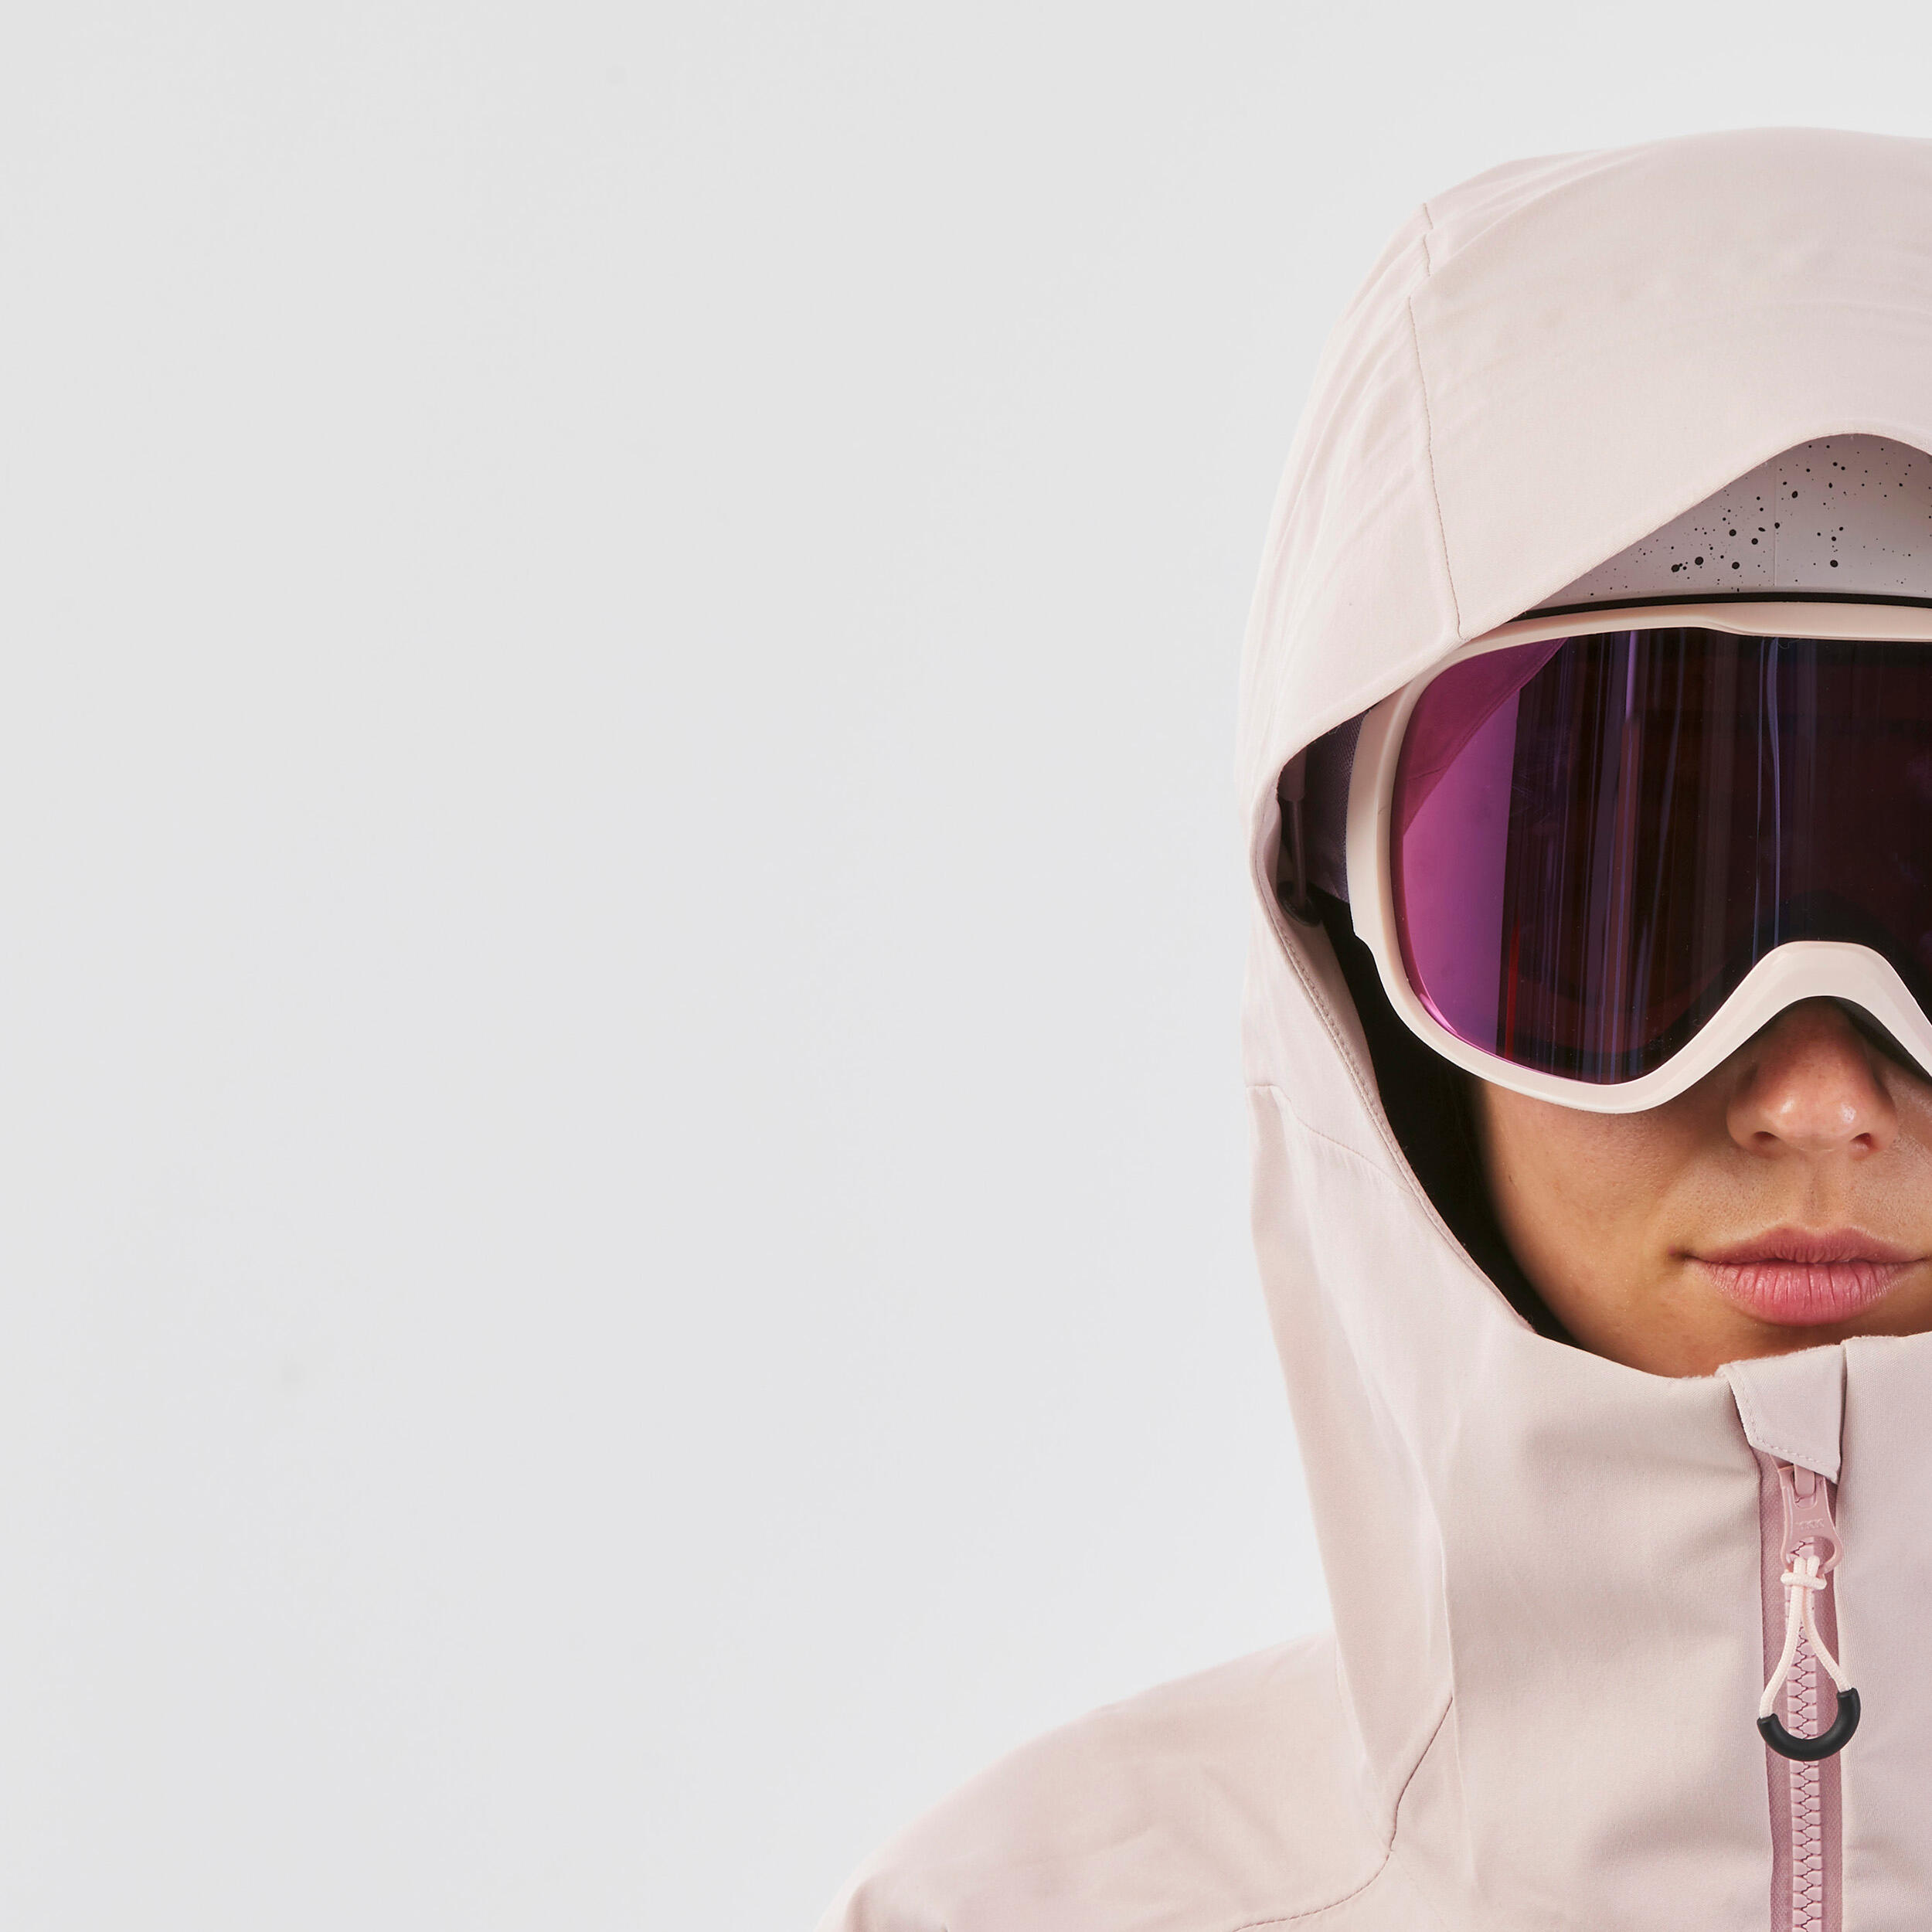 Women’s Ski Jacket - FR 500 - WEDZE